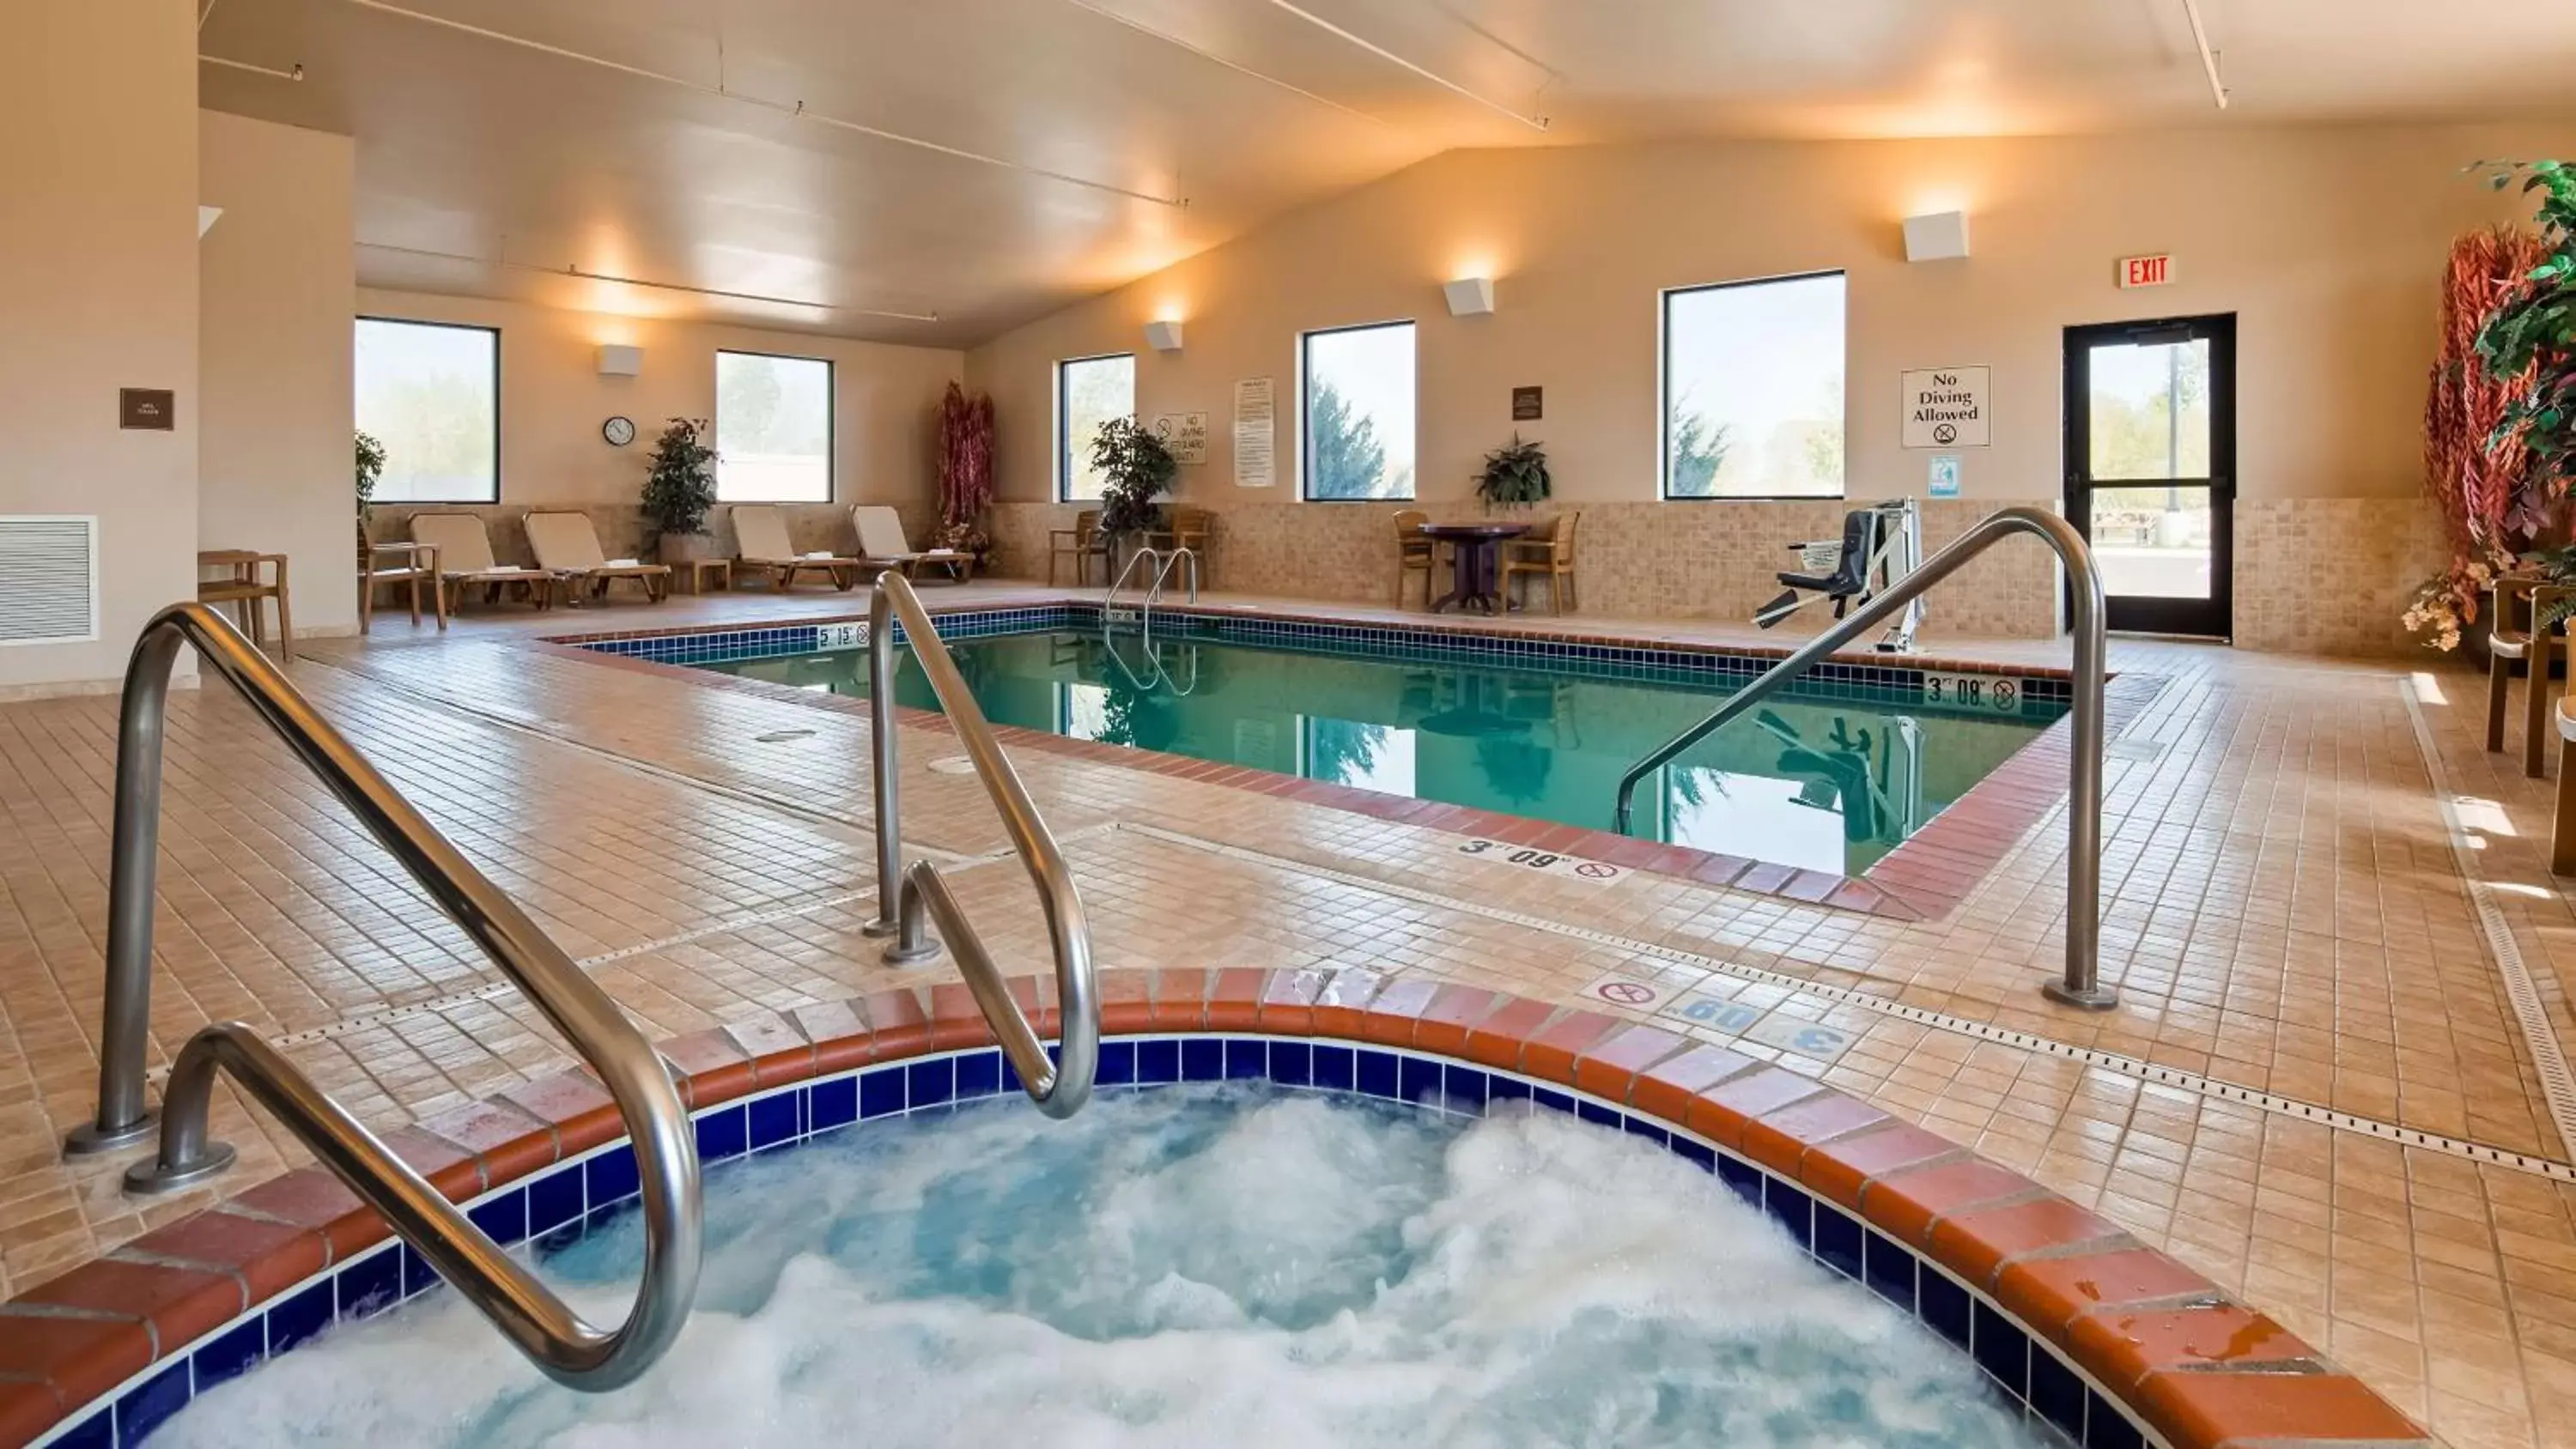 On site, Swimming Pool in Best Western Golden Prairie Inn and Suites